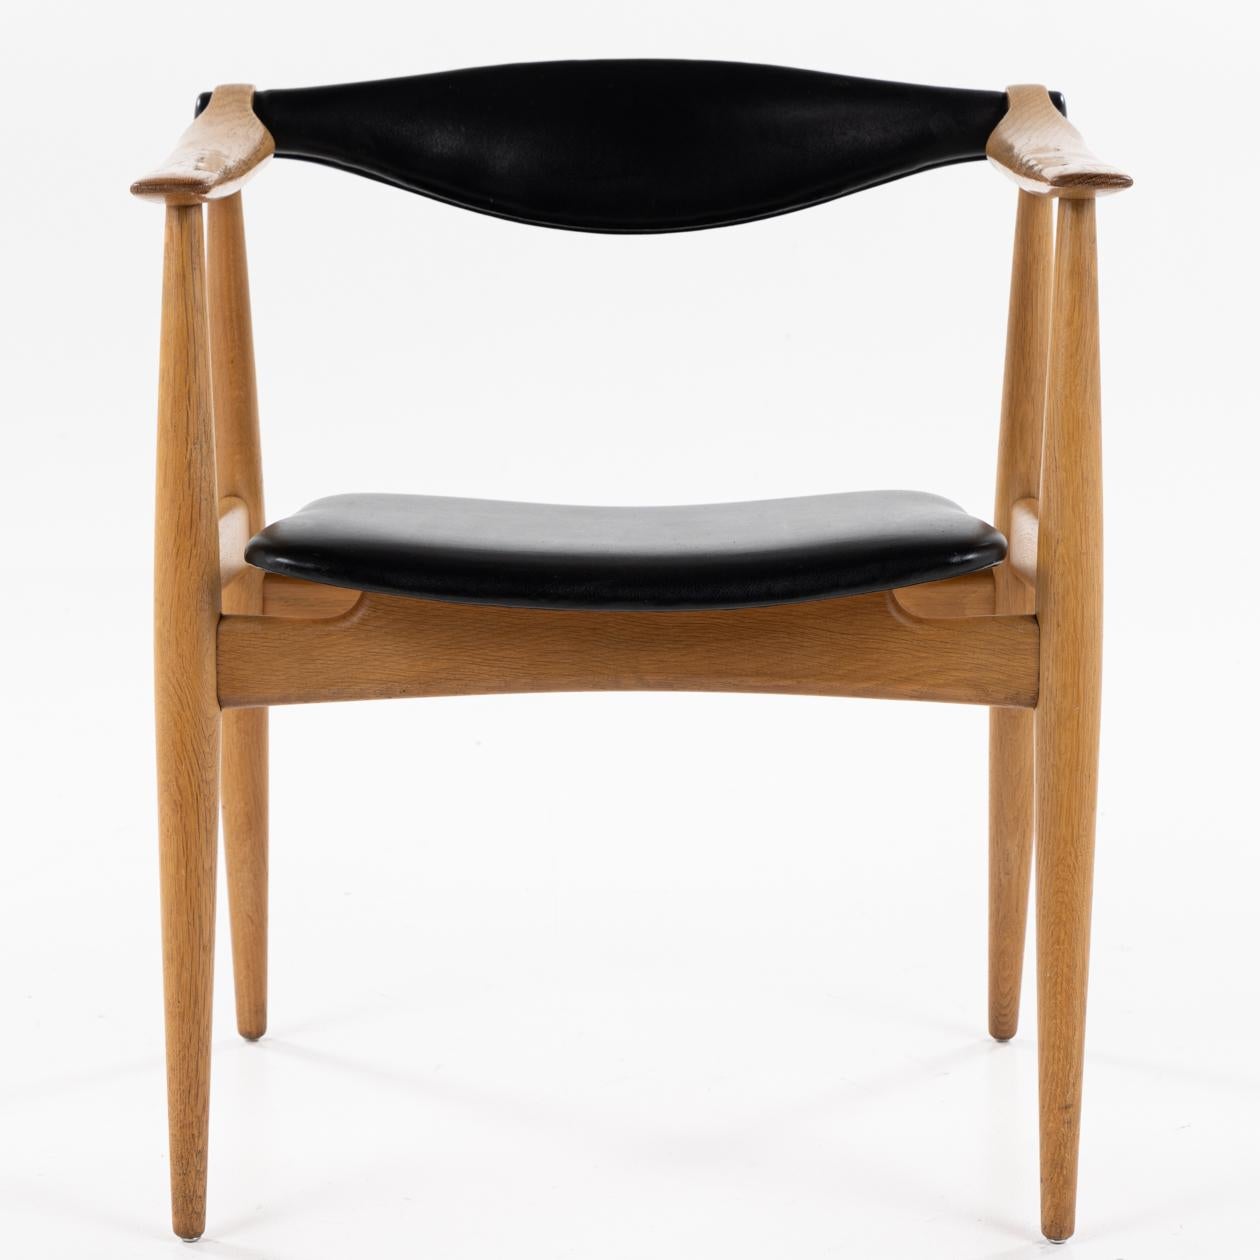 CH 34 - ‘Yoke' armchairs in lacquered oak and black leather. Backrest with tilt. Hans J. Wegner / Carl Hansen